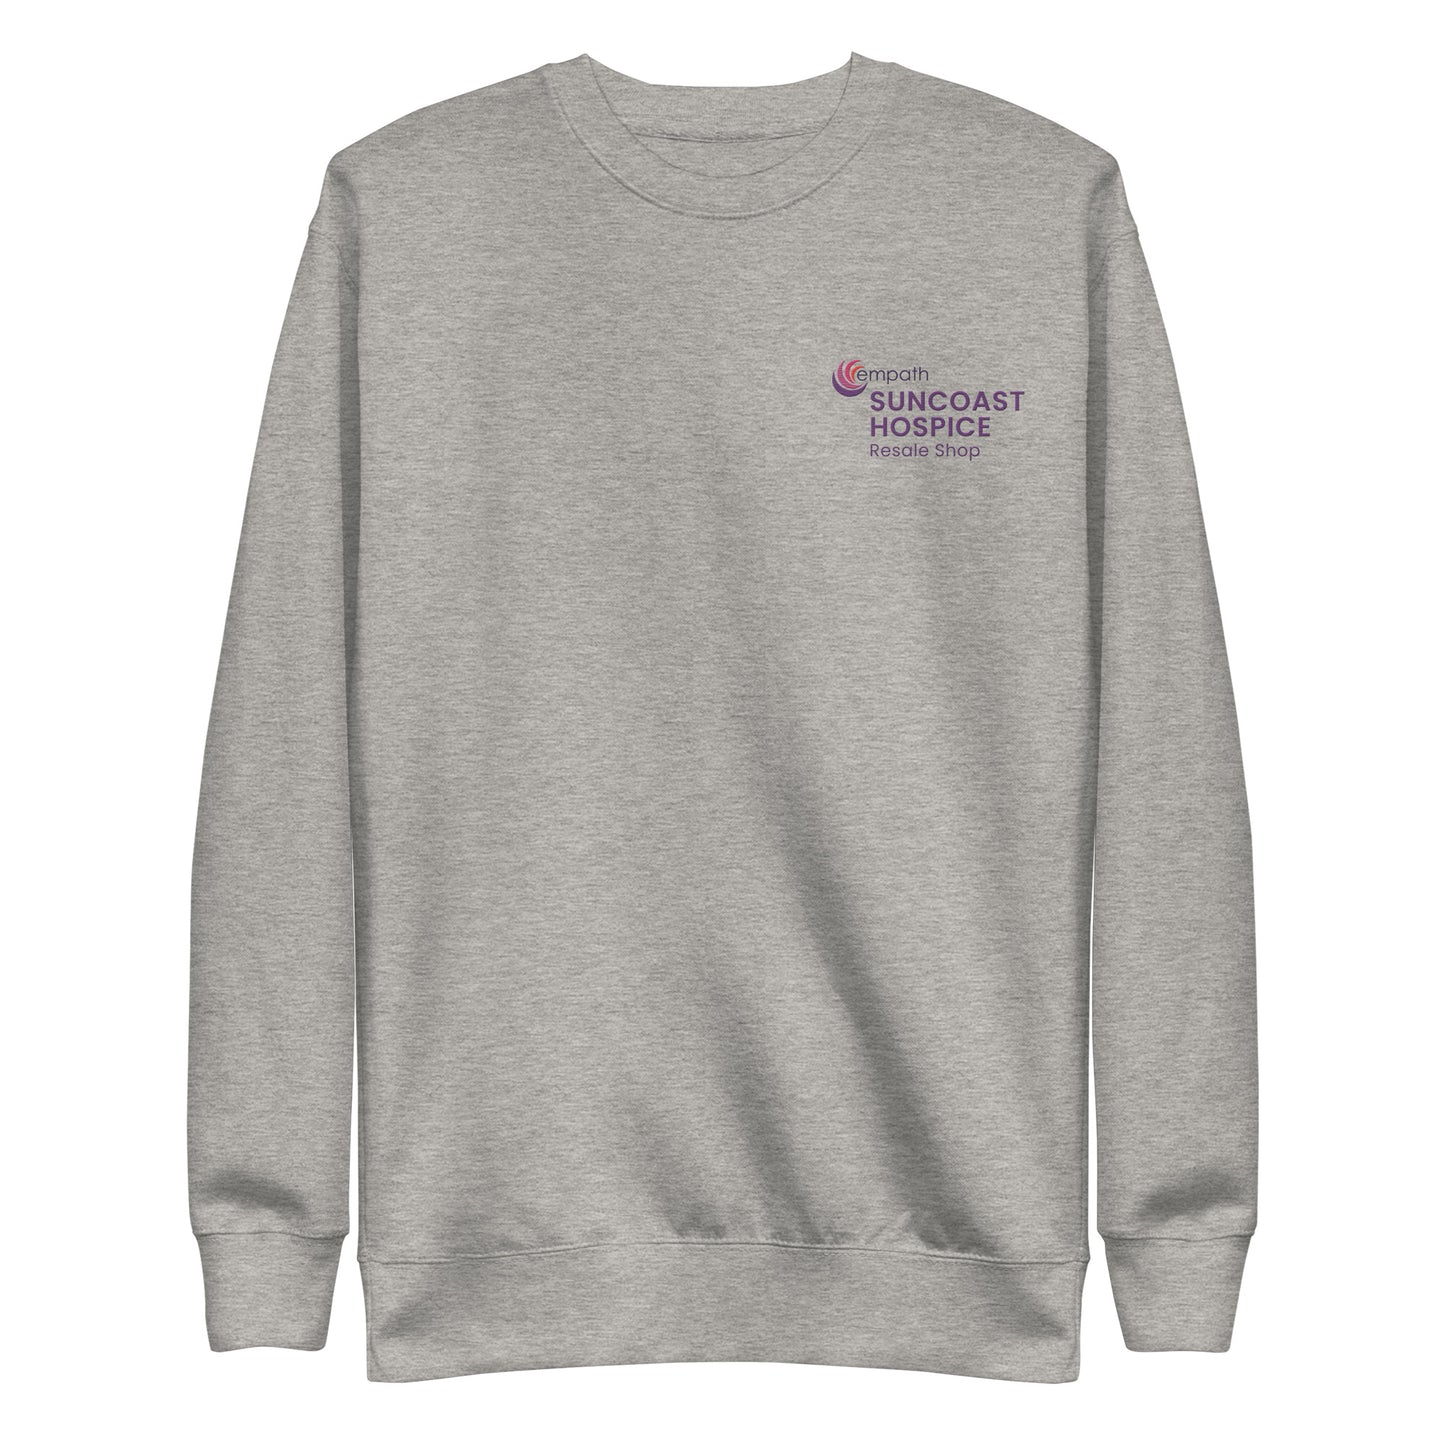 Unisex Premium Sweatshirt (fitted cut) - Suncoast Hospice Resale Shop